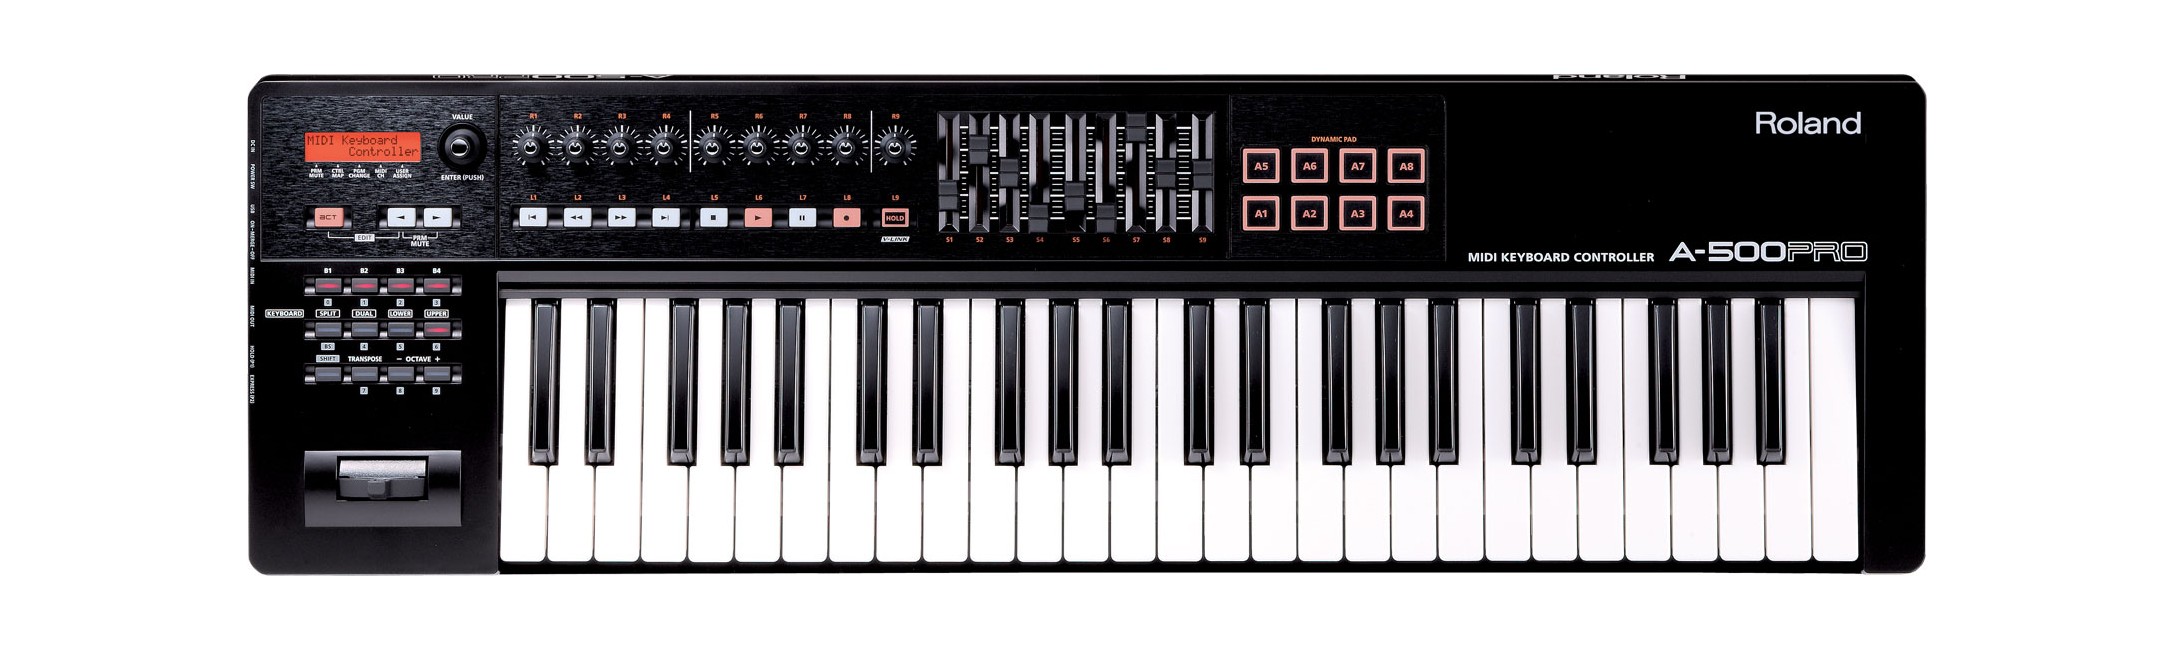 Roland A-500 PRO Midi Keyboard